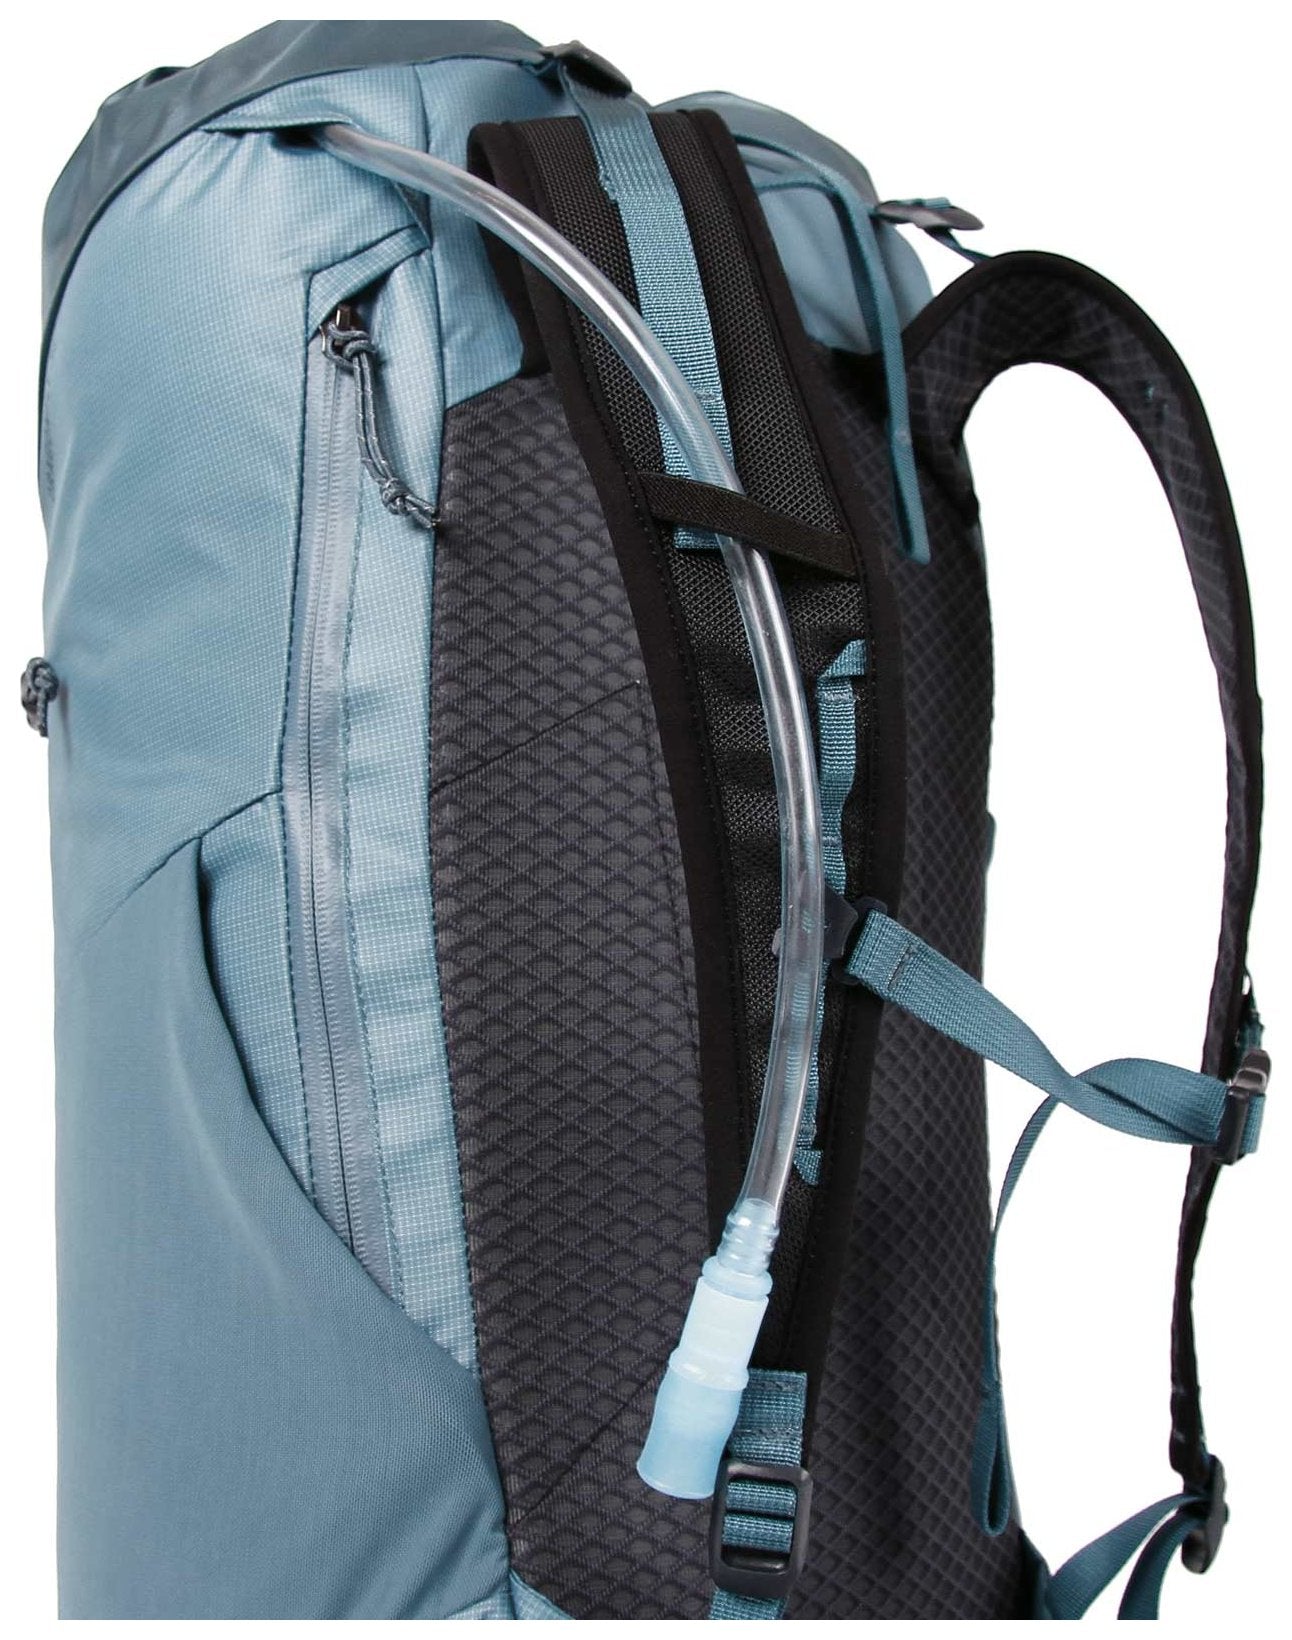 Dragonfly (34L), ultralight alpine backpack